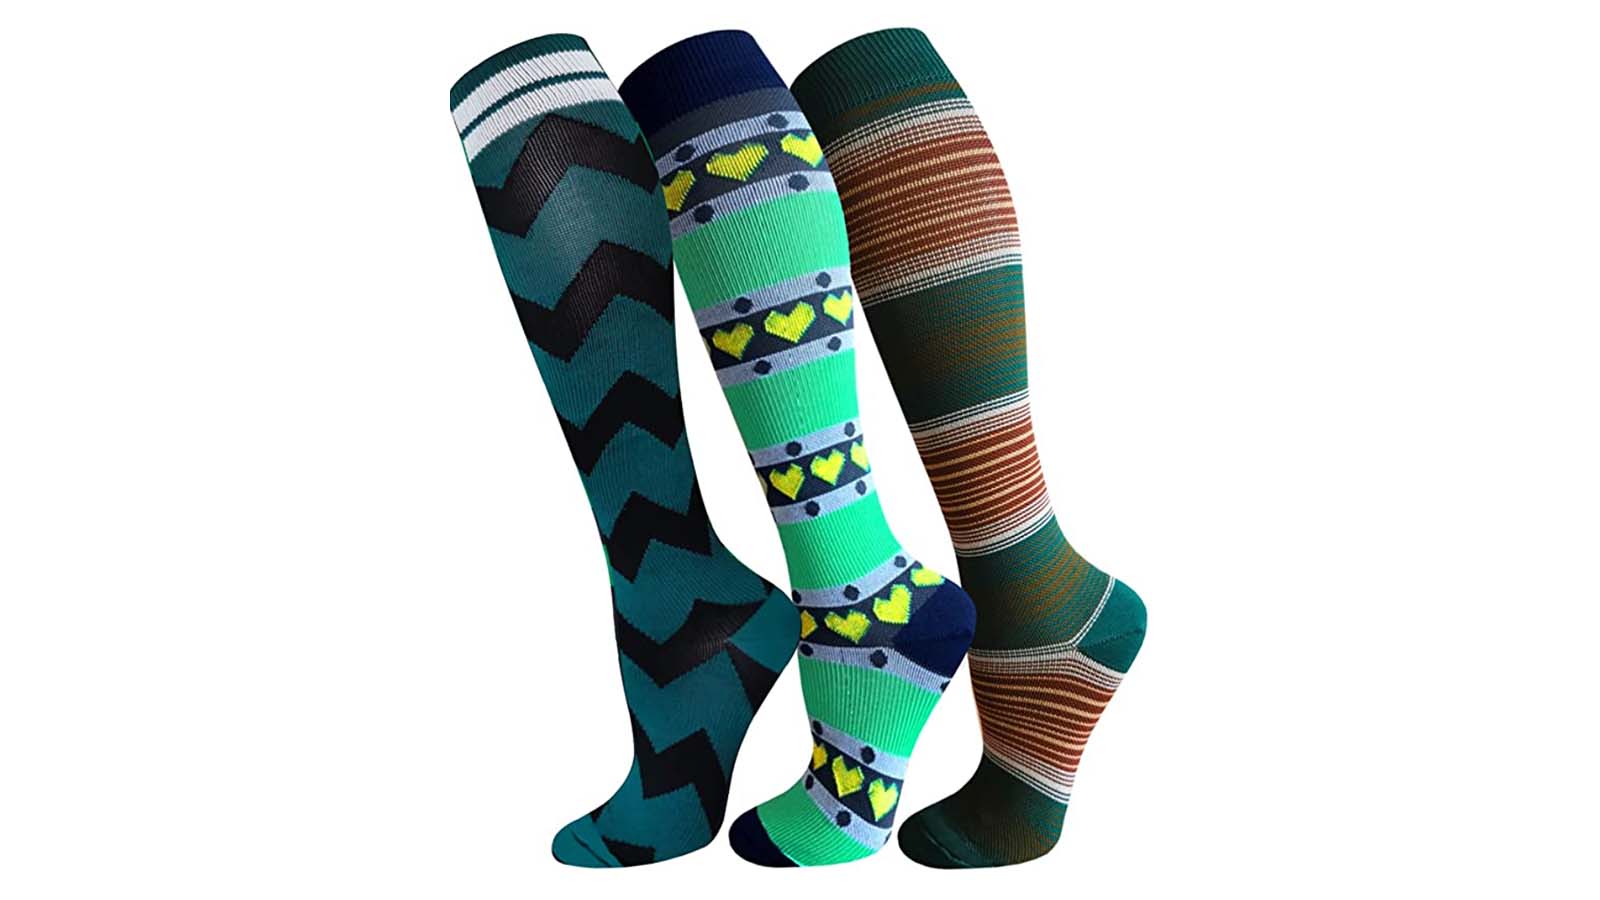 Flying Pug Compression Socks Soccer Socks High Socks For Running,Medical,Athletic,Edema,Varicose Veins,Travel,Nursing. 